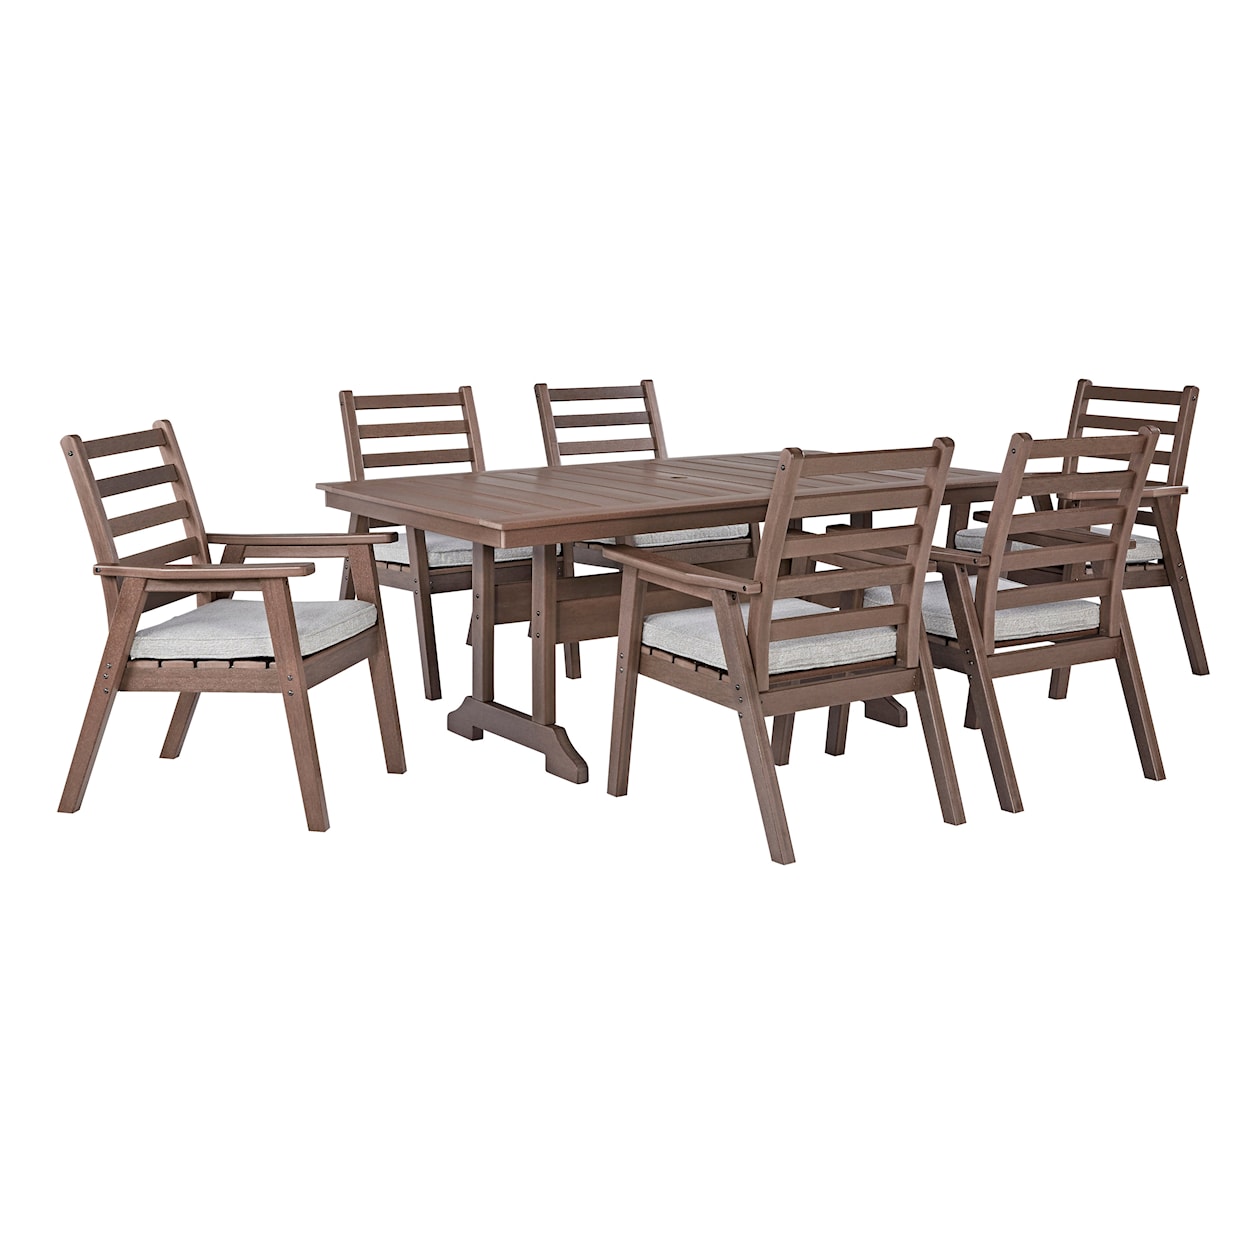 Ashley Furniture Signature Design Emmeline Outdoor Dining Table